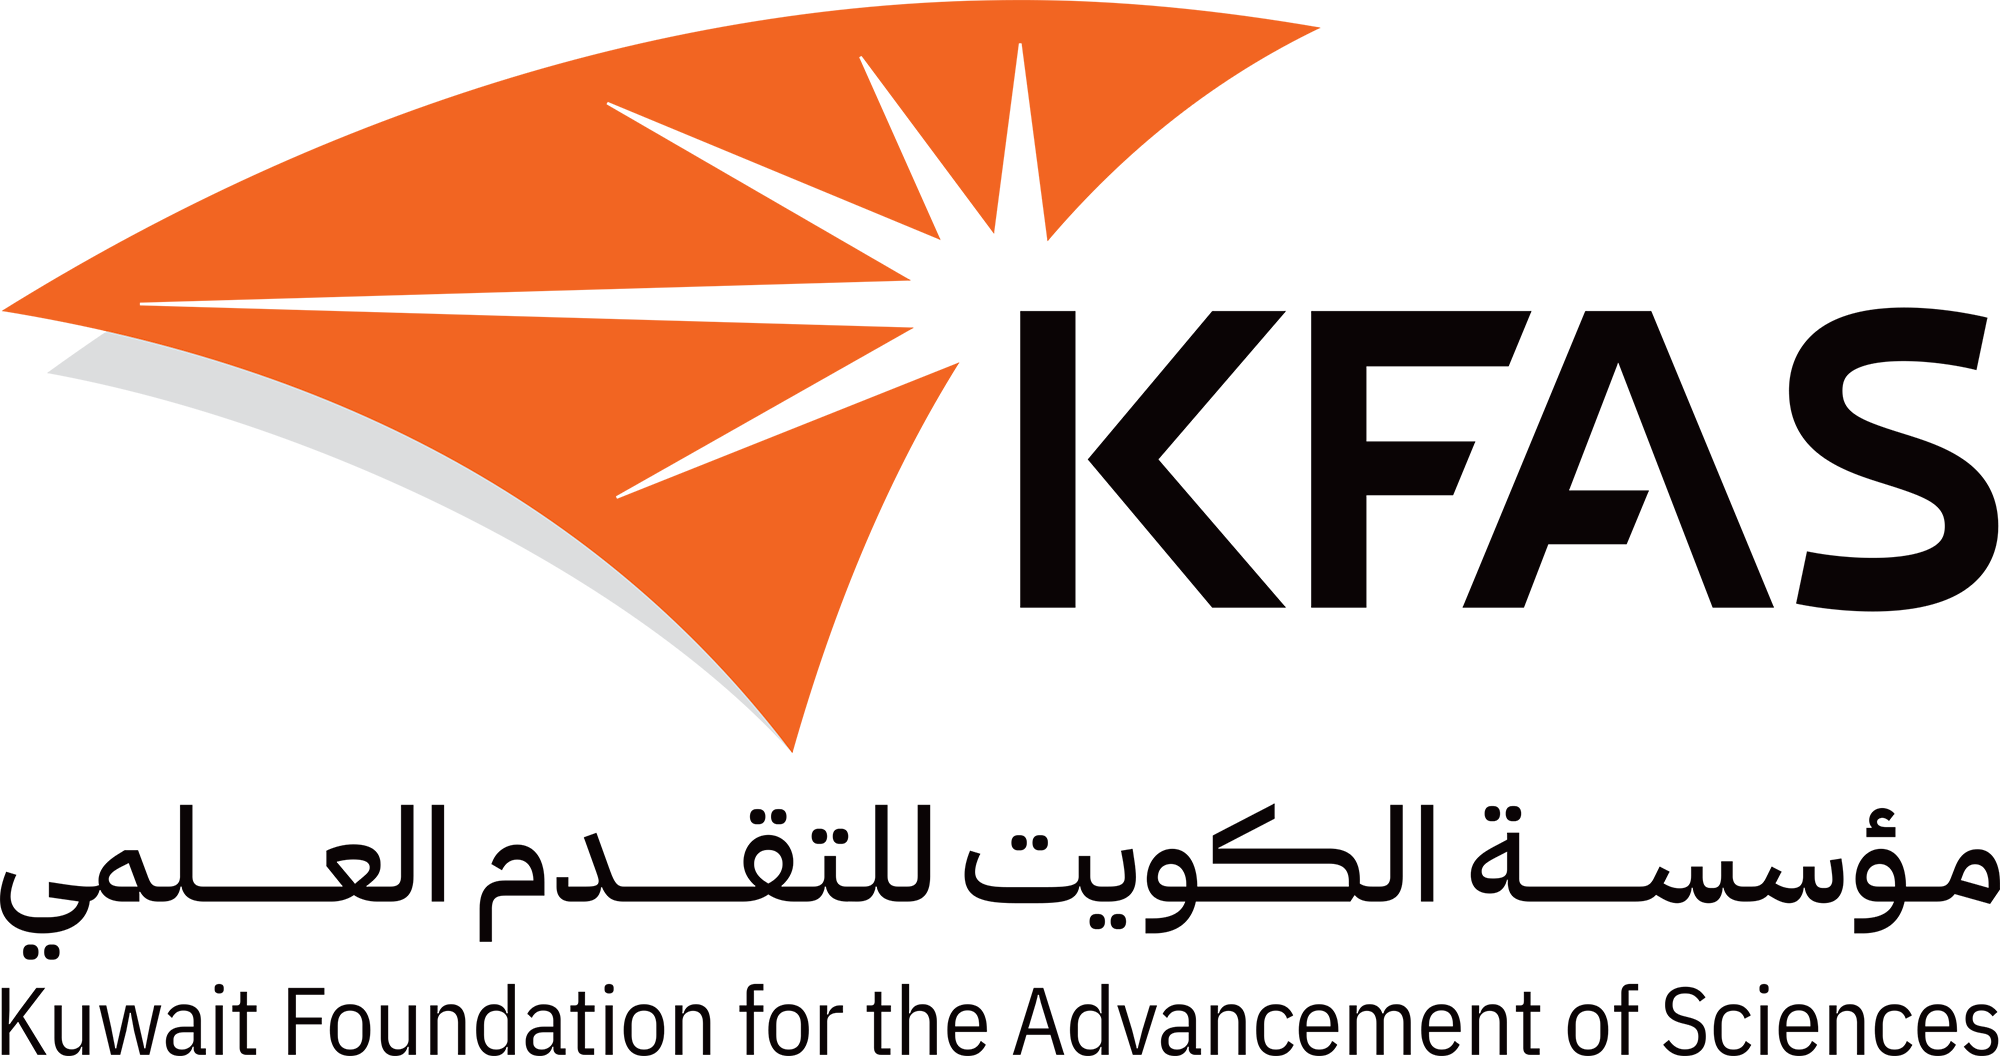 KFAS Logo